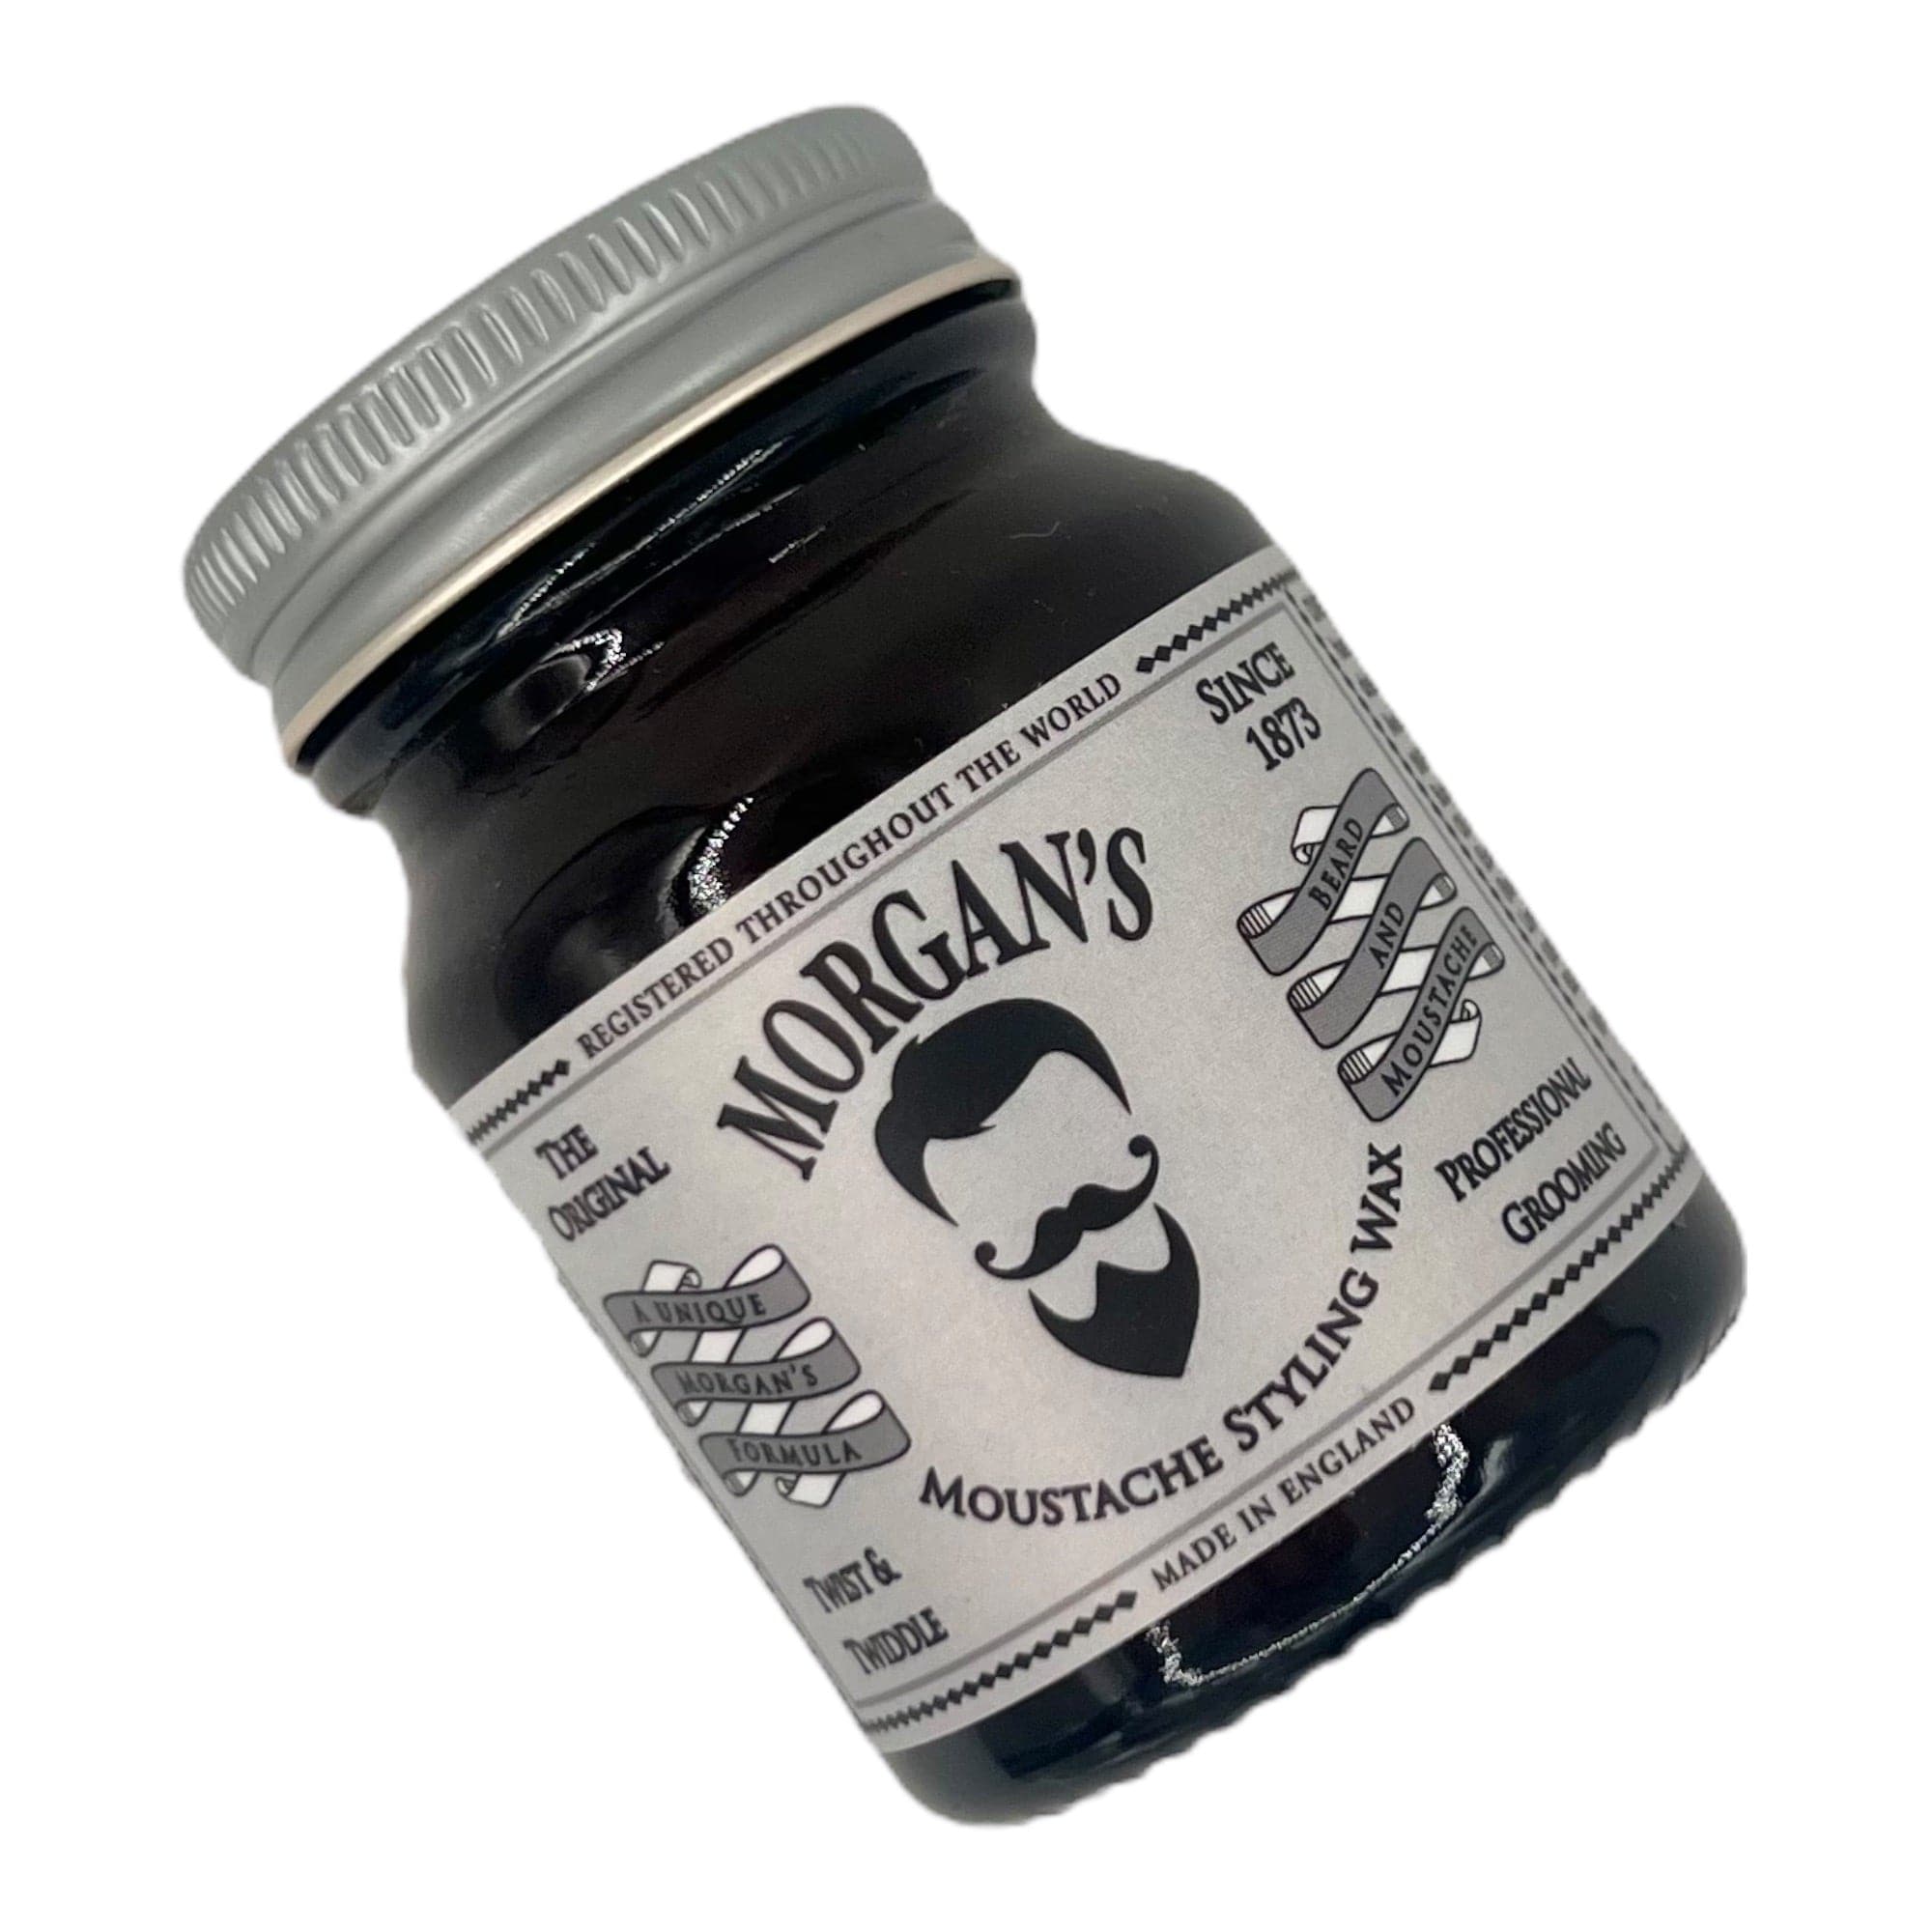 Morgan's - Moustache Styling Wax 50g